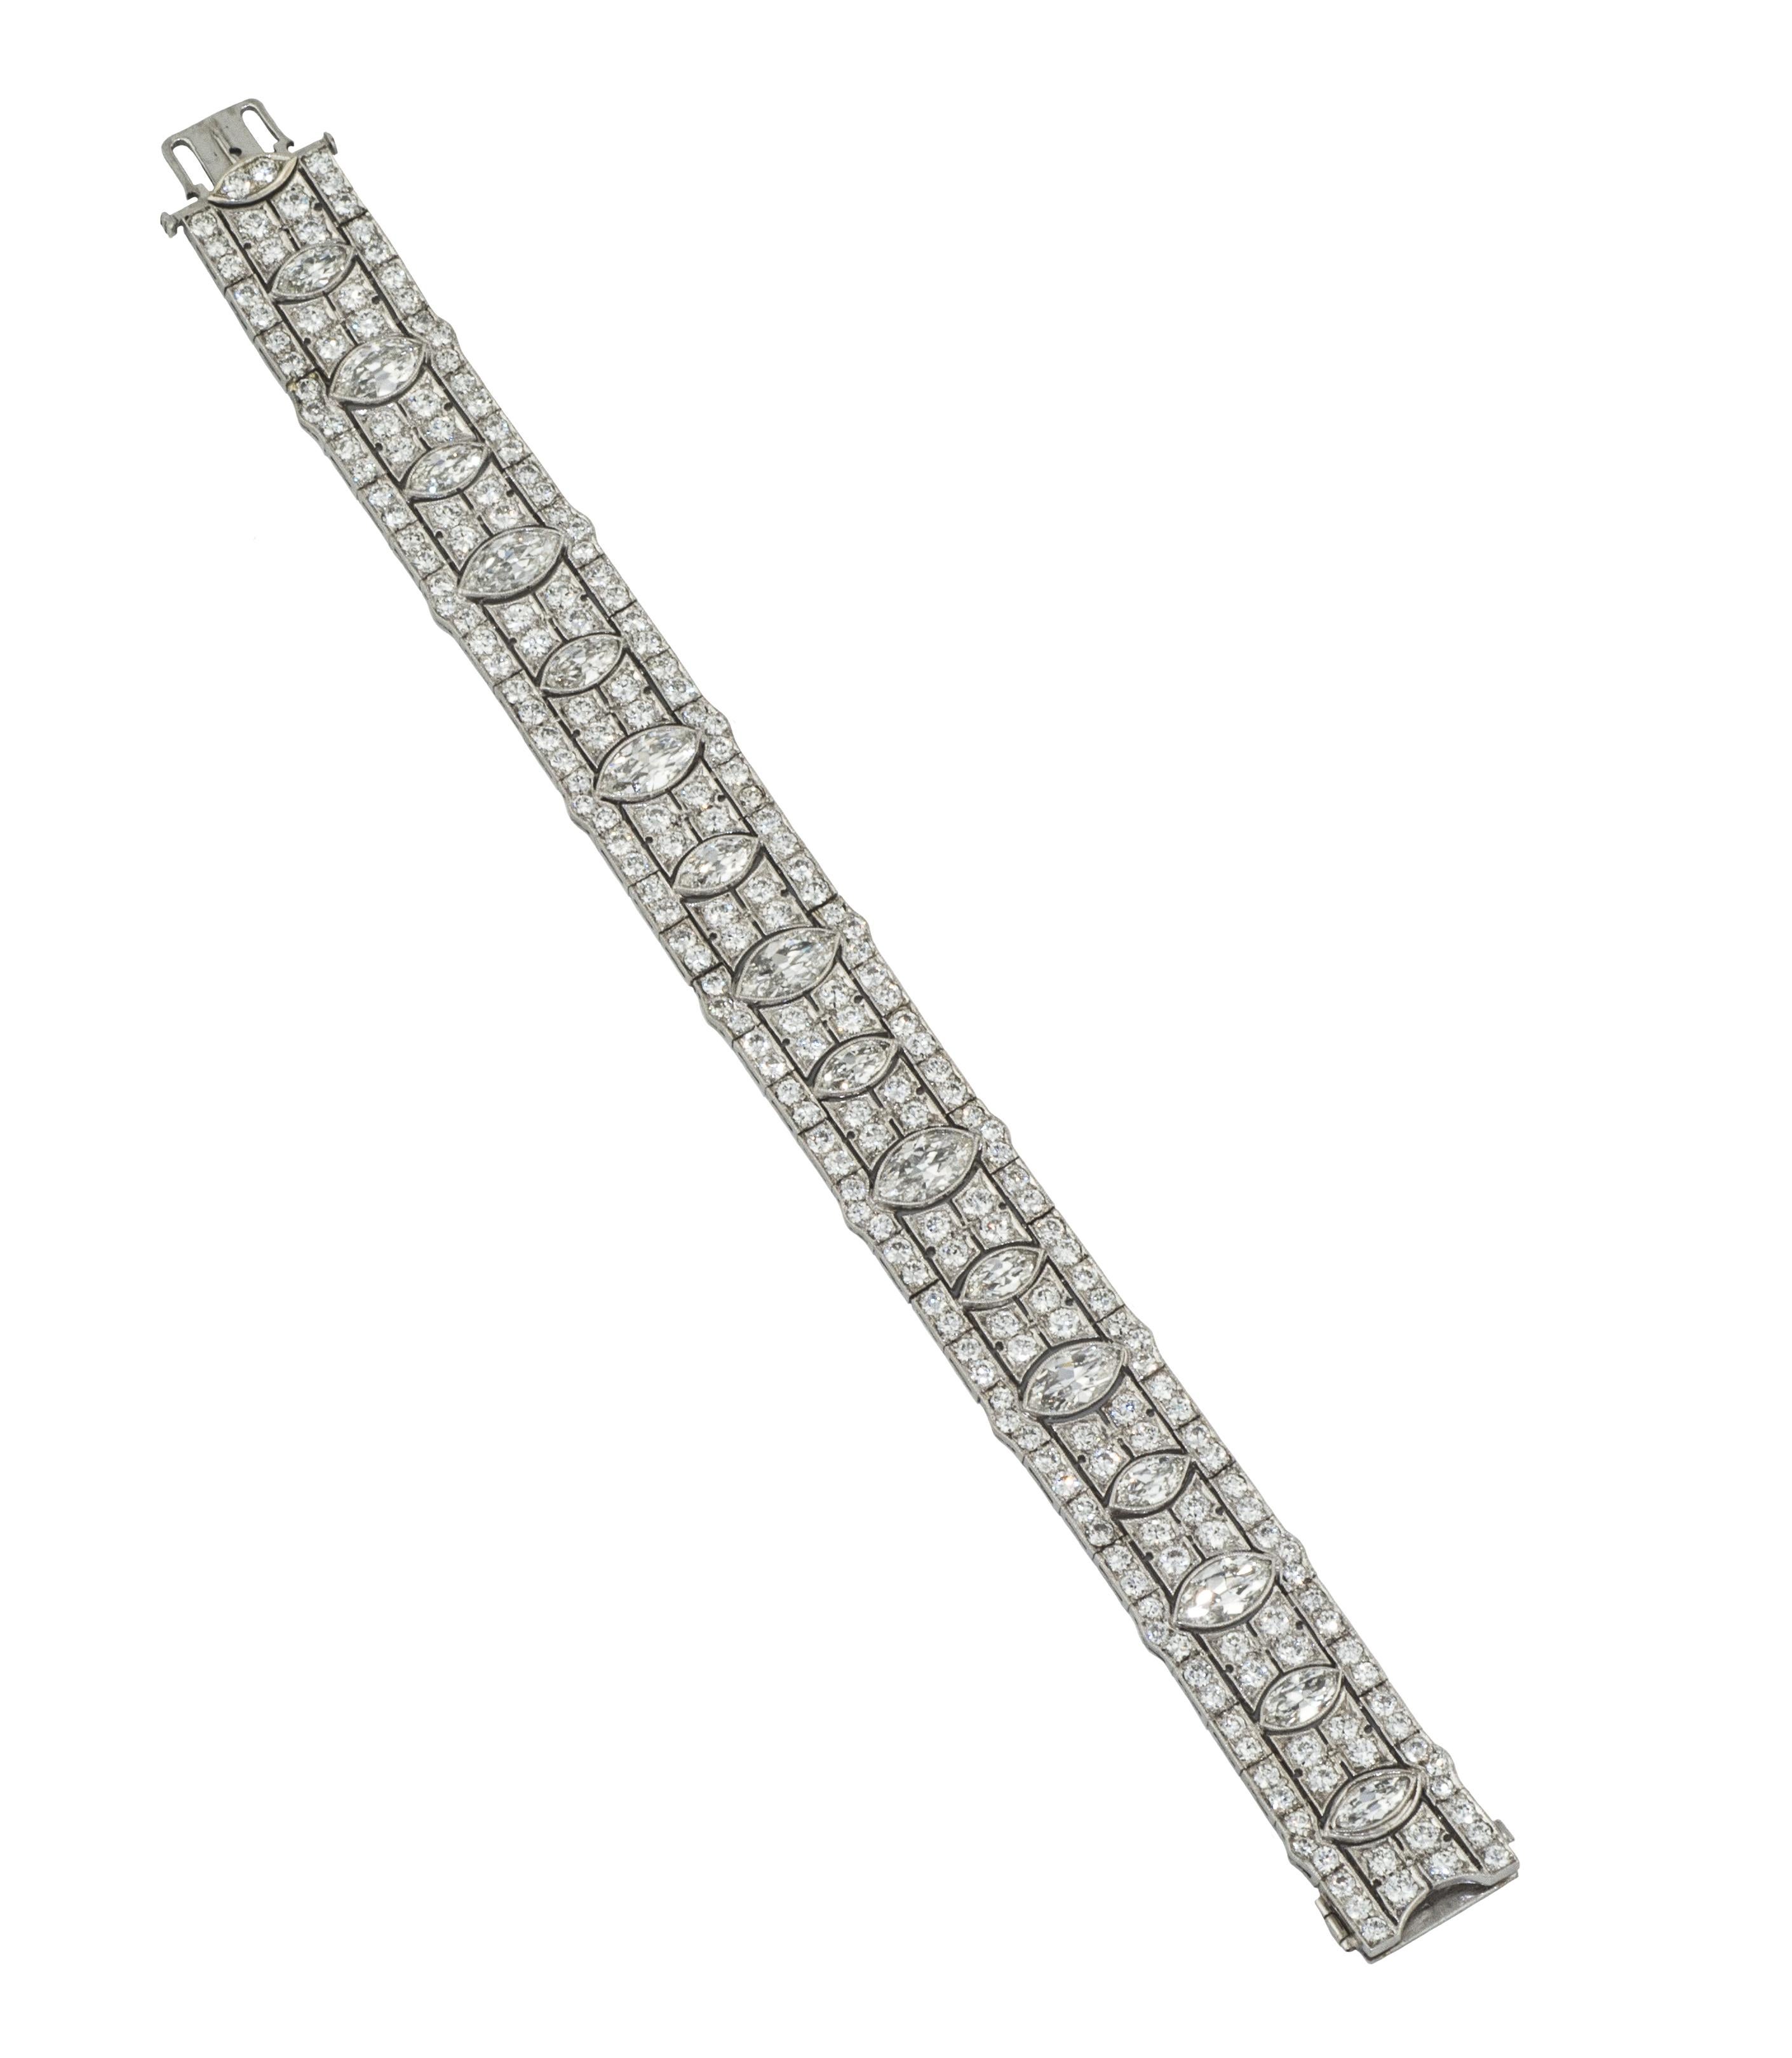 Diamond and Platinum Art Deco Bracelet, 16 Marquise Cut Diamonds approximately 9ct; 212 Diamonds approximately 8ct; Ca 1920